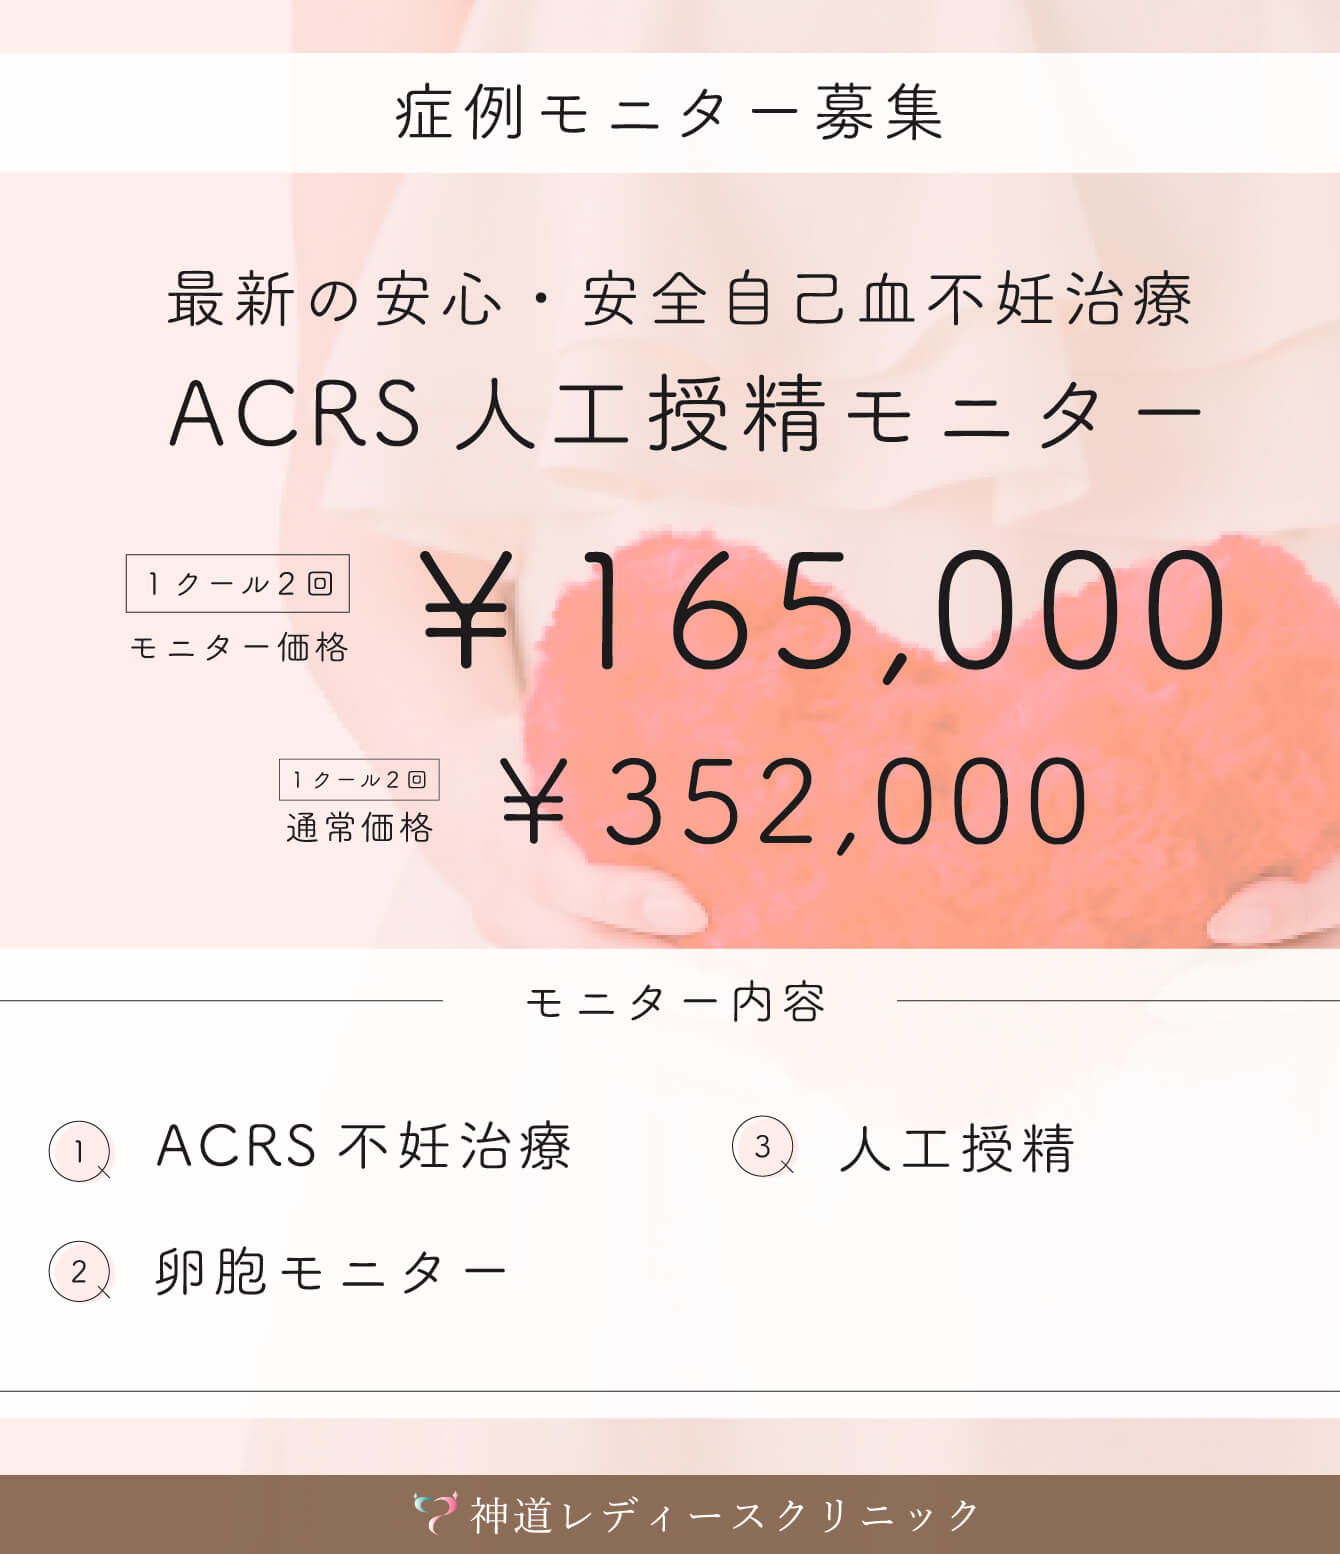 PFC-FD / ACRS（再生医療）